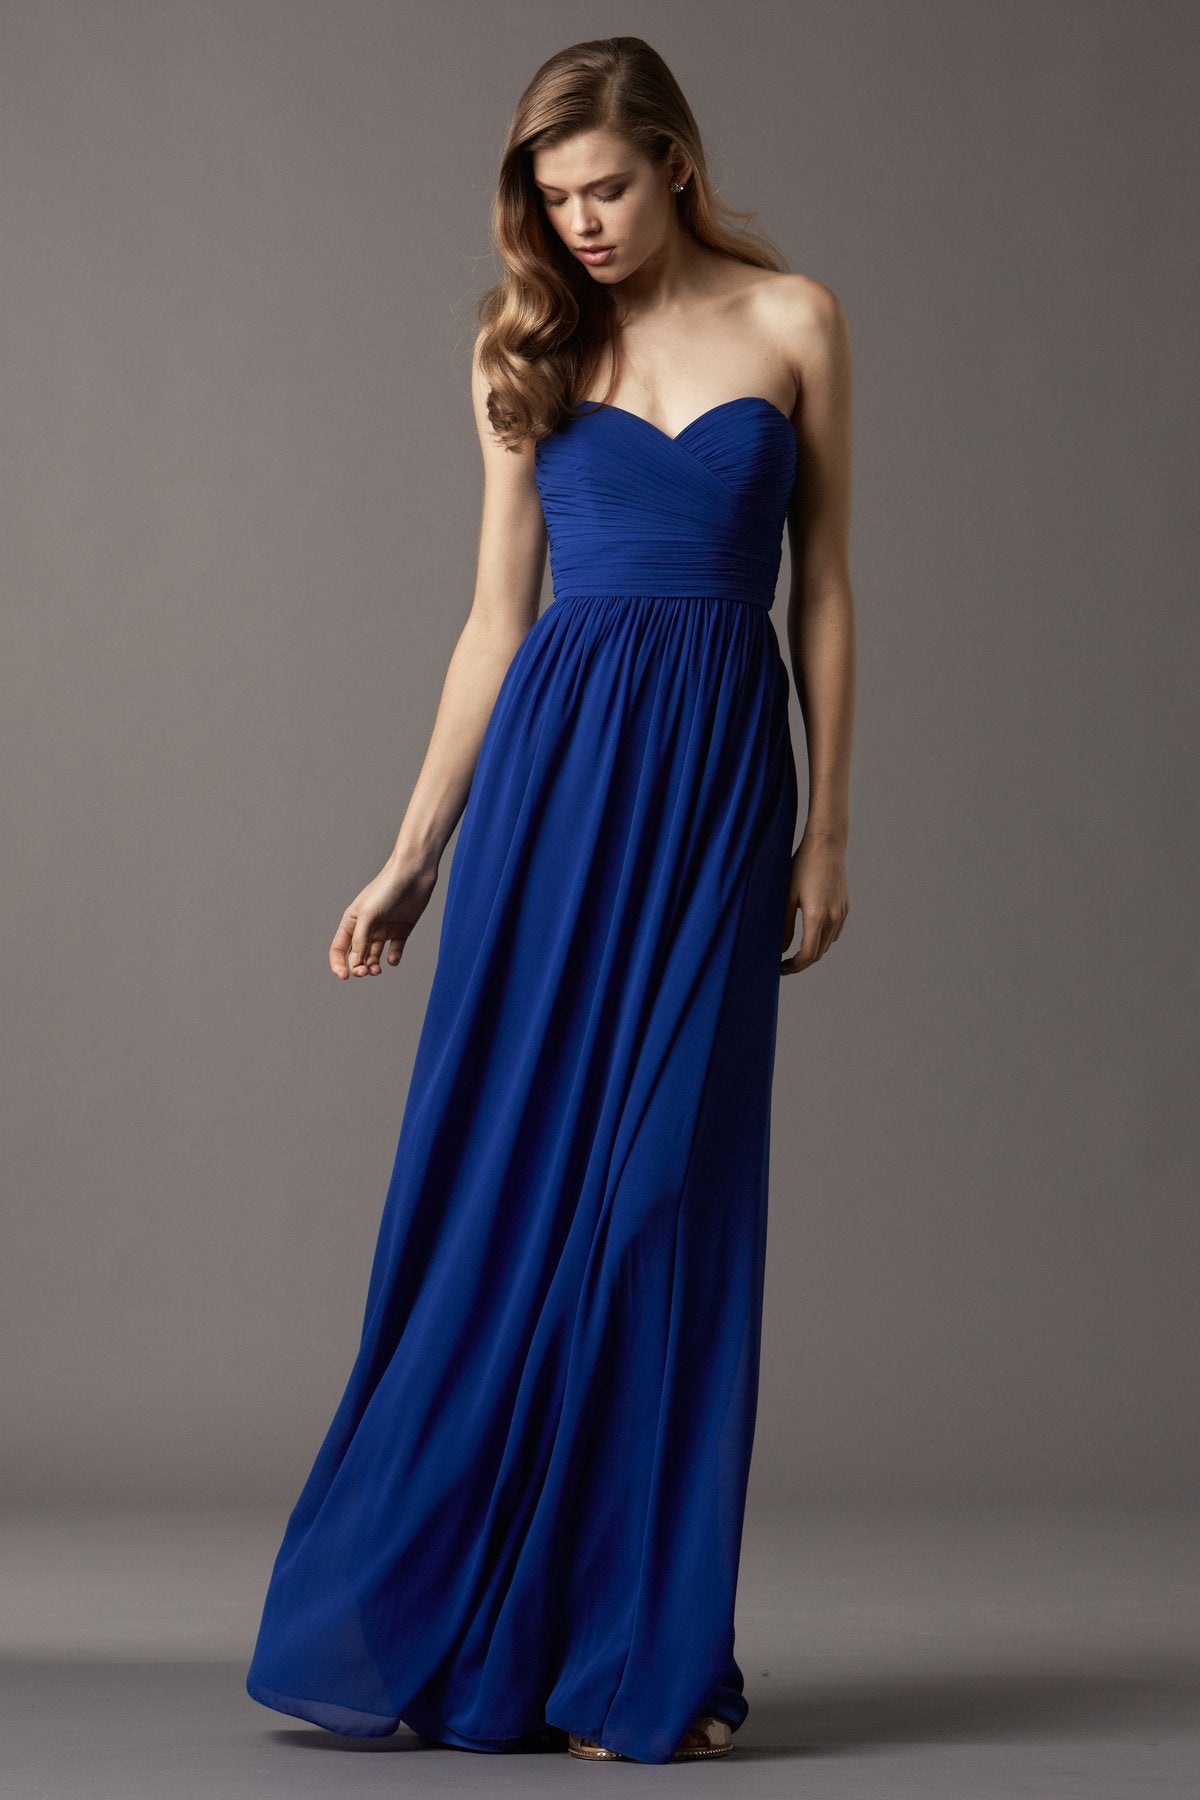 Royal Blue Chiffon A-line Sweetheart Floor-length Bridesmaid Dress(BD761)